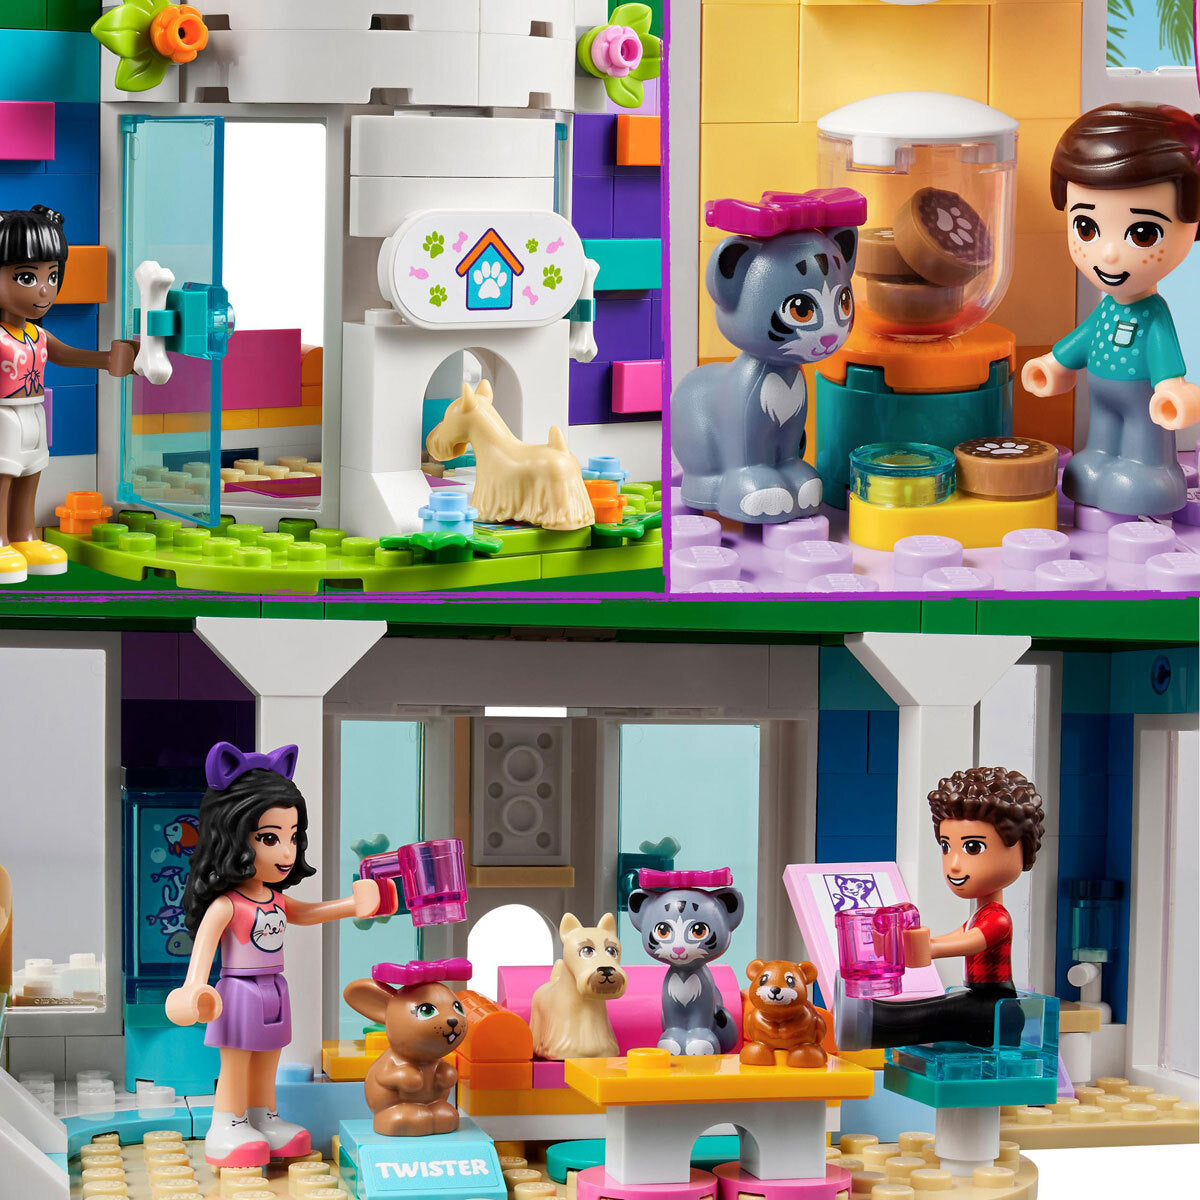 LEGO Friends - Pet Day-Care Center 41718